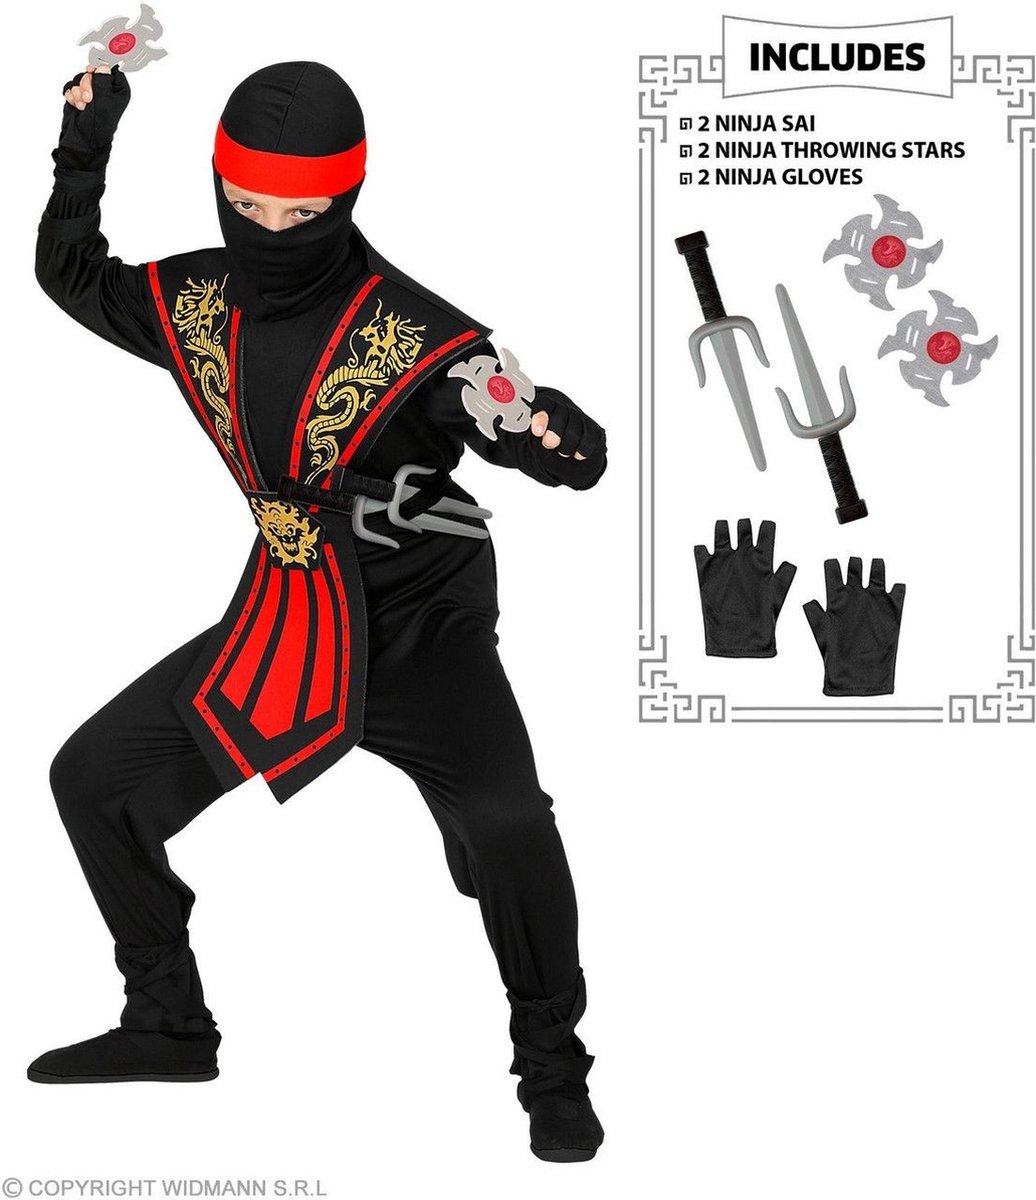 Widmann - Ninja & Samurai Kostuum - Vurige Draken Ninja Met Wapens Kind - Jongen - rood,zwart - Maat 128 - Carnavalskleding - Verkleedkleding